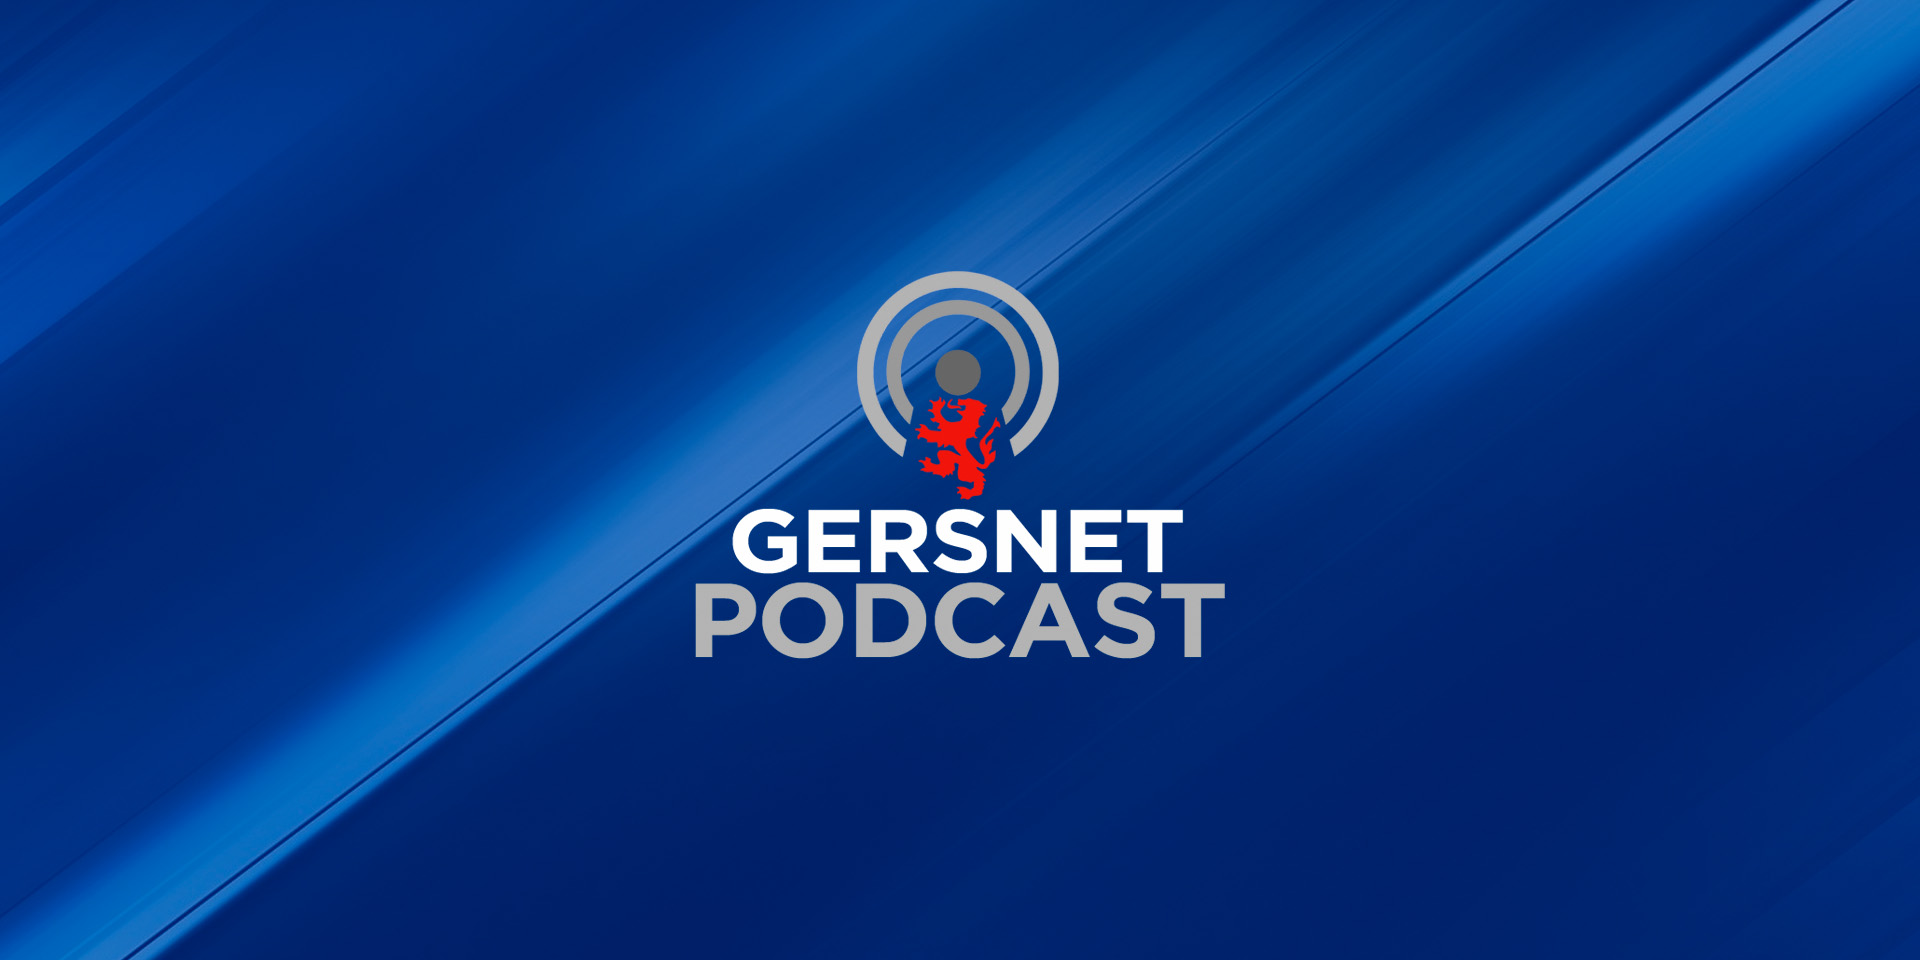 Gersnet Podcast 280 - A Wonderful Weekend